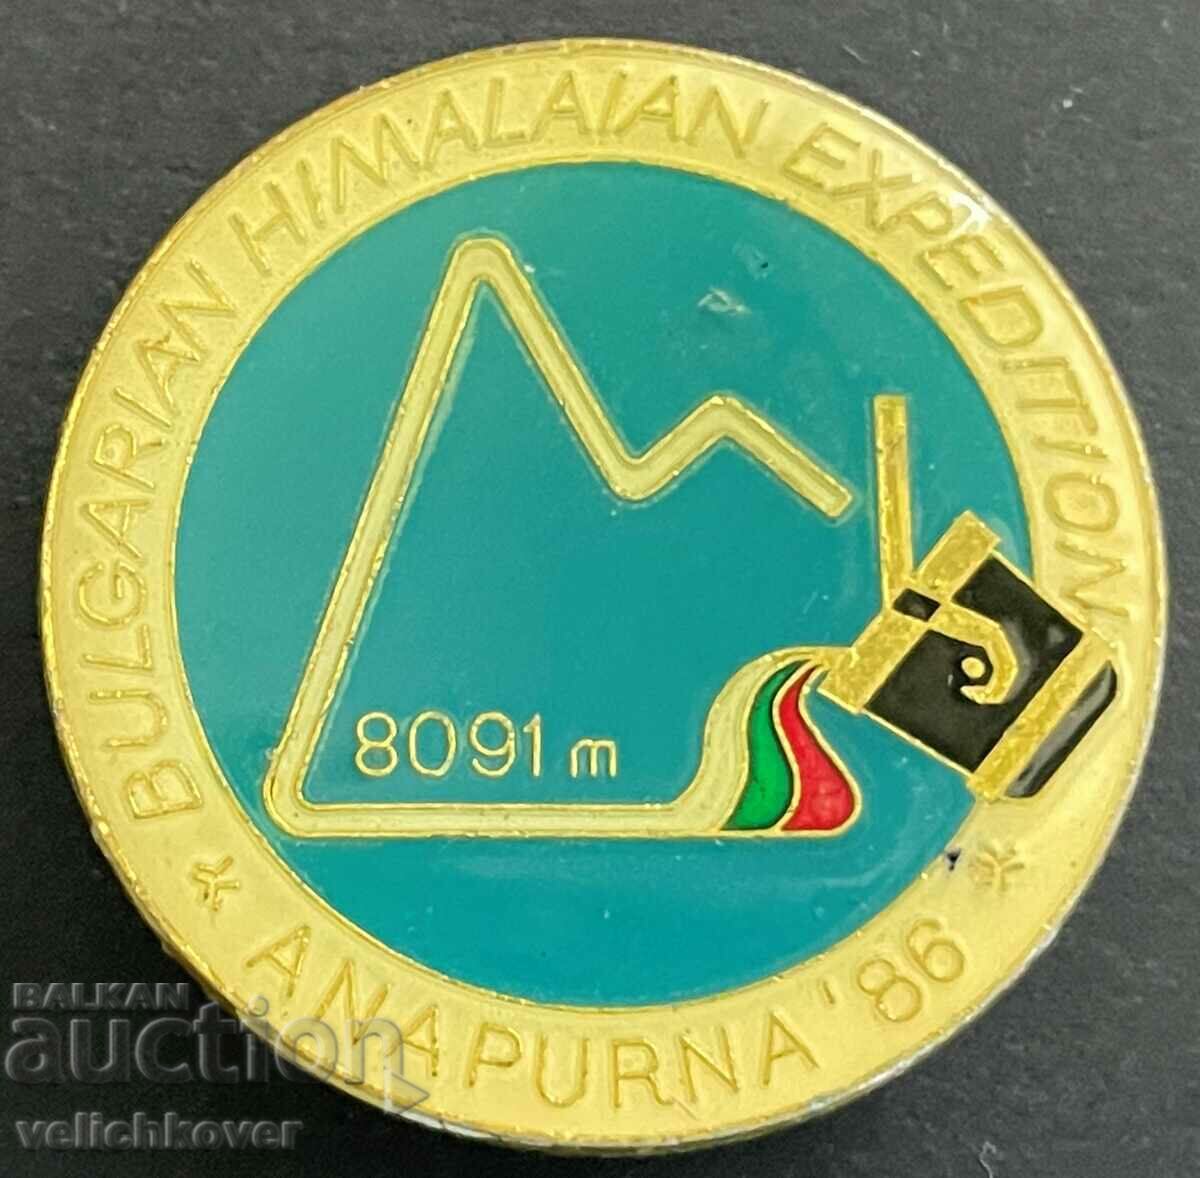 33830 Bulgaria Annapurna Himalaya Mountaineering Expedition sign